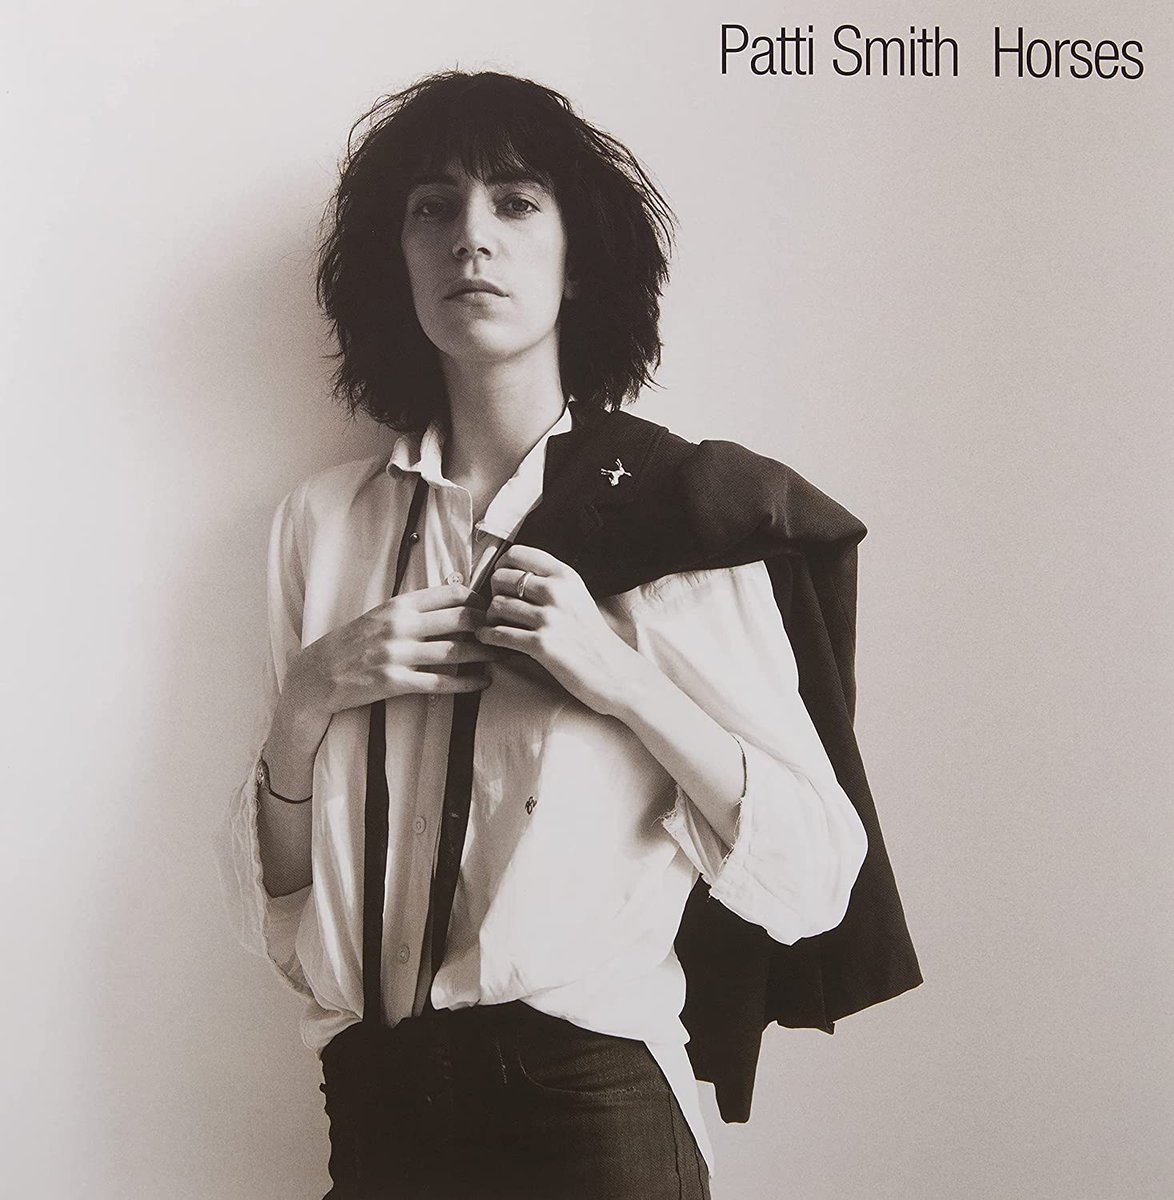 #NowPlaying Horses by Patti Smith #RecordOfTheDay #ROTD #AlbumOfTheDay #AOTD #1260 #PattiSmith #PunkRock #ArtPunk #GarageRock #USA 🇺🇸